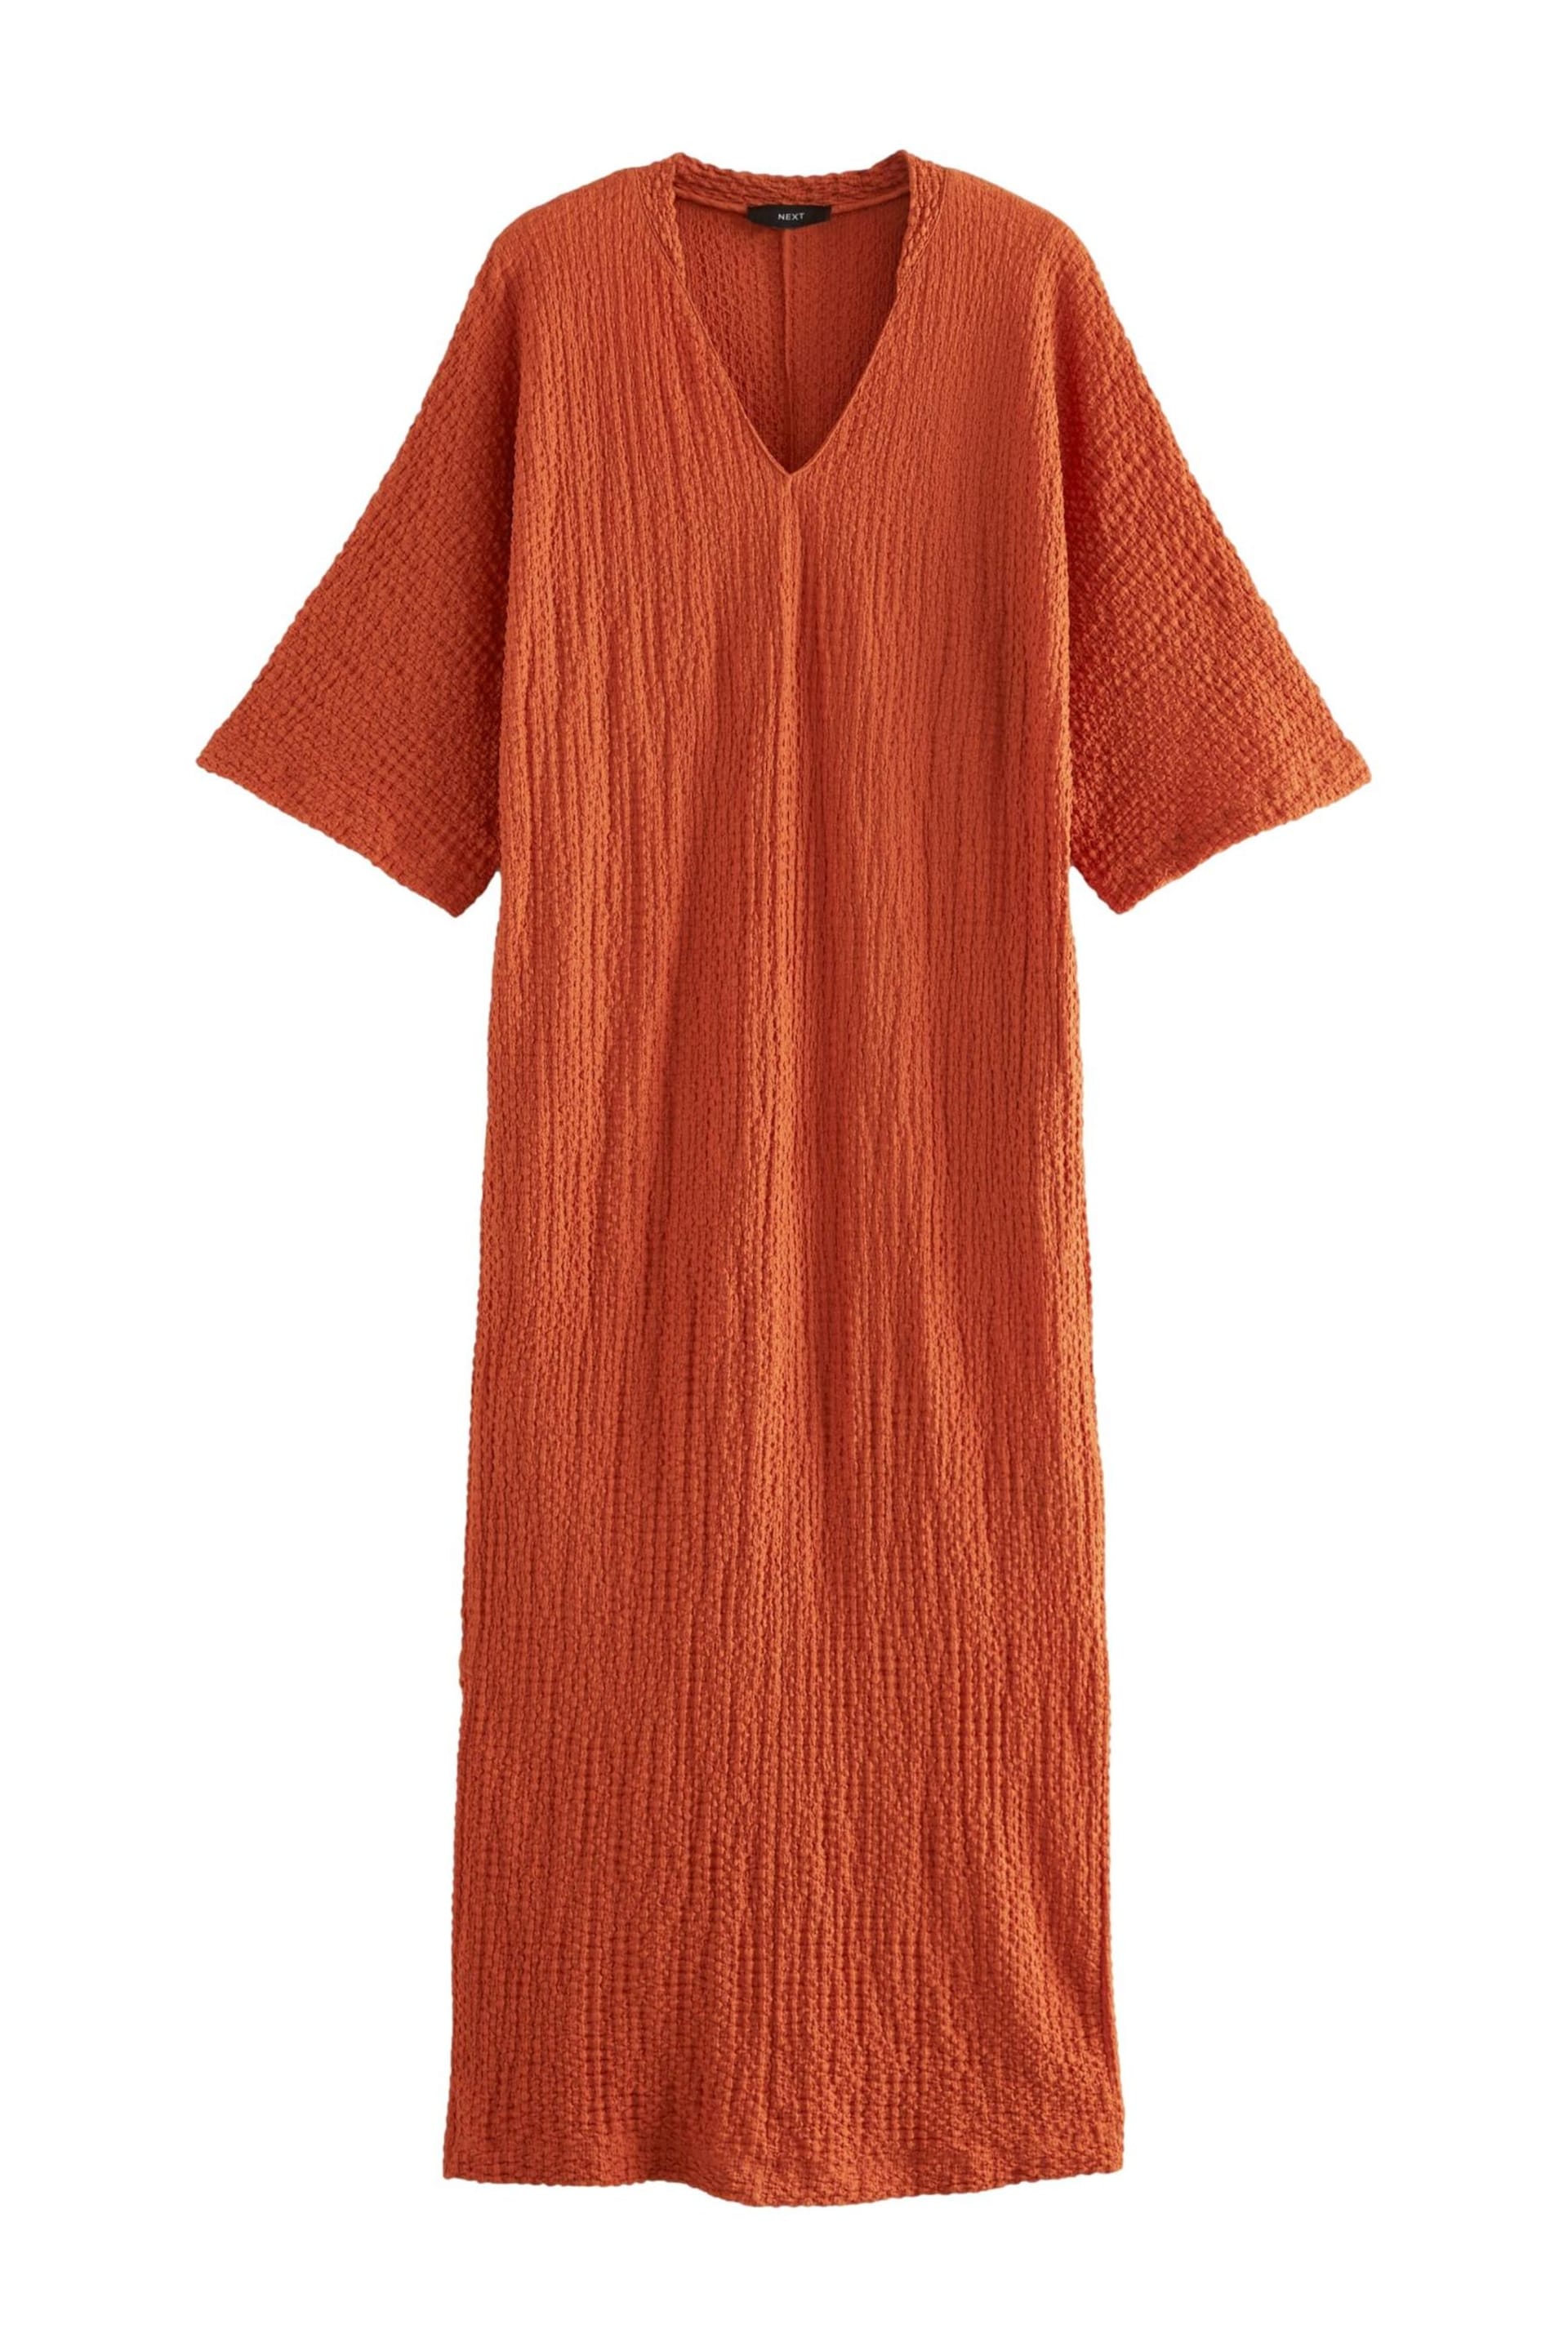 Rust Orange V-Neck Textured Midi Dress - Image 5 of 6